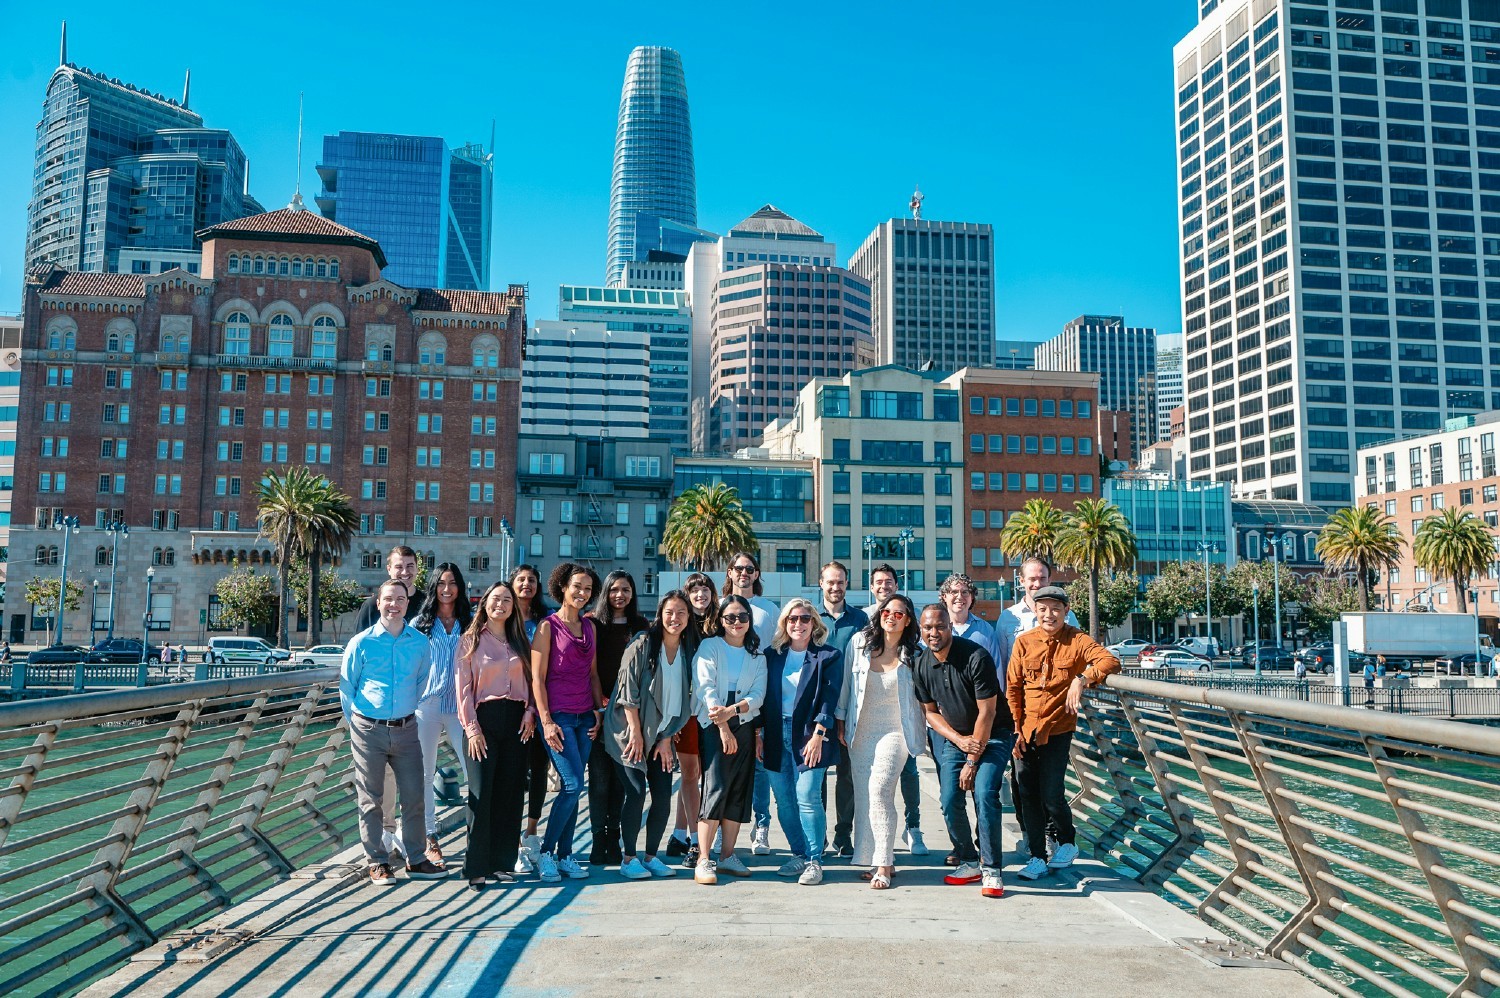 The Wilbur Labs team in San Francisco